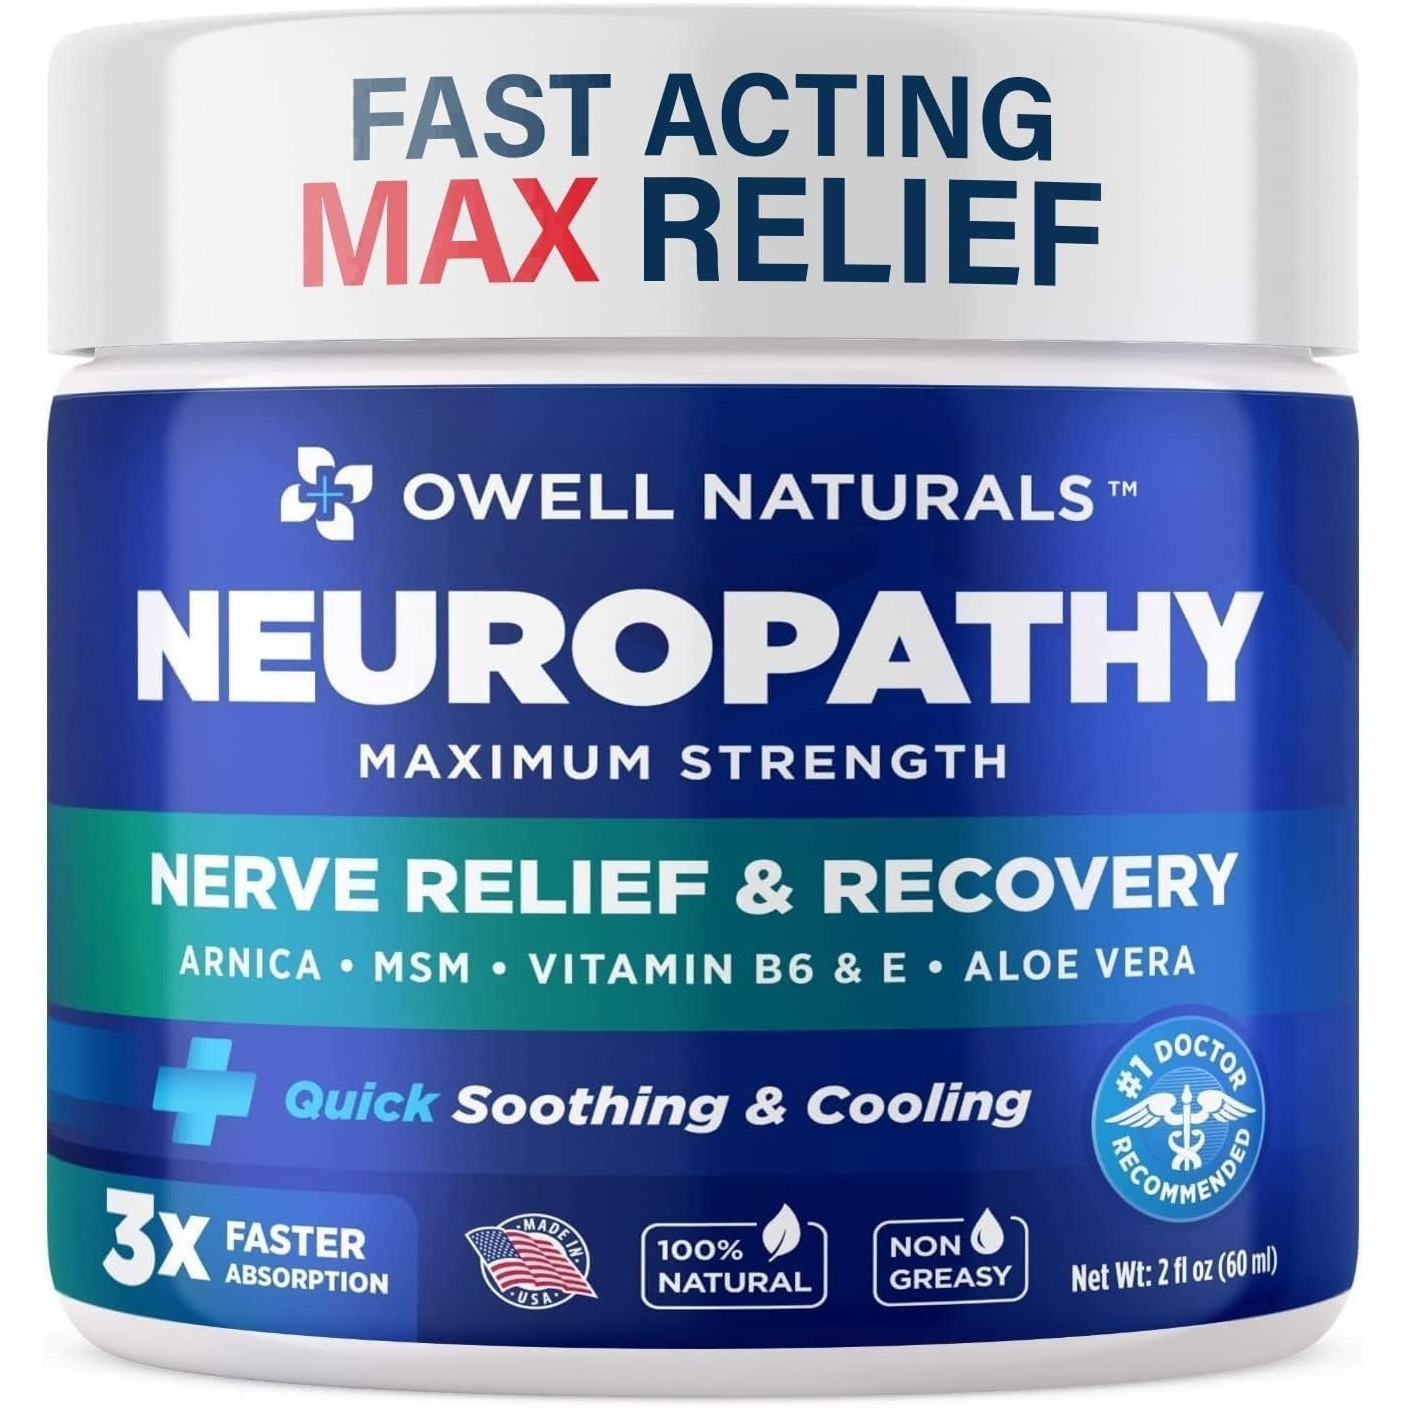 OWELL-NATURALS-Neuropathy-Nerve-Relief-Cream